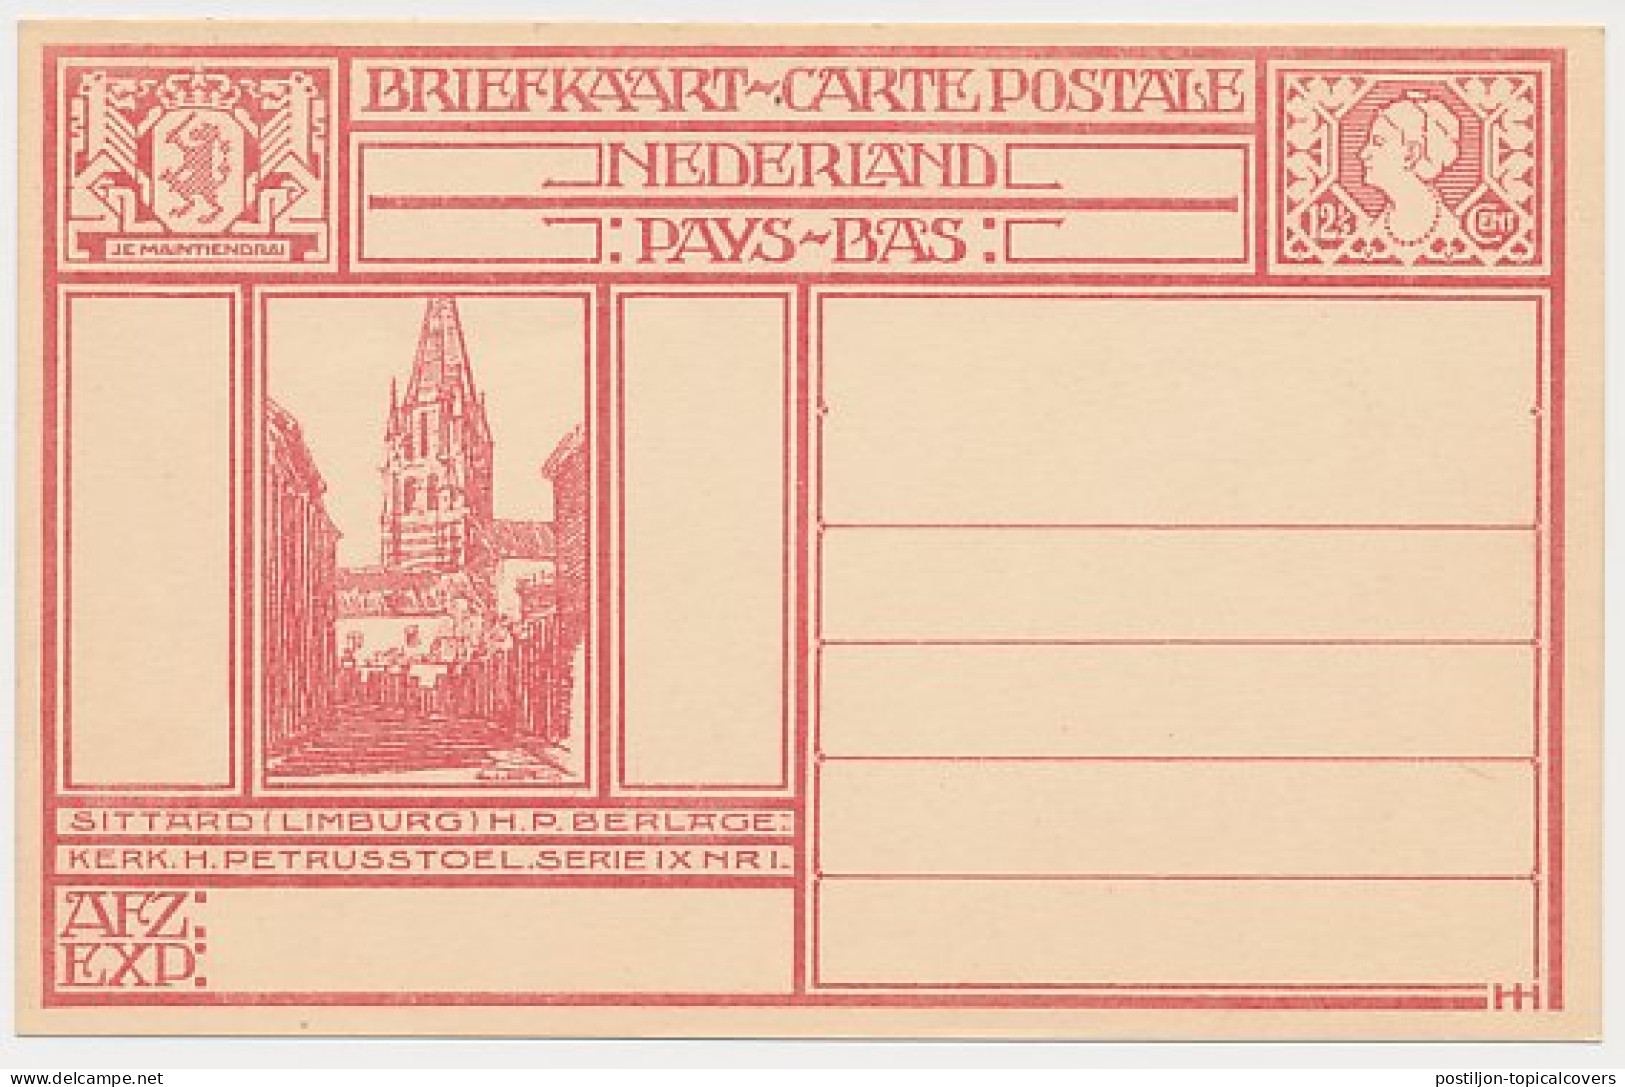 Briefkaart G. 199 N - Sittard - Interi Postali